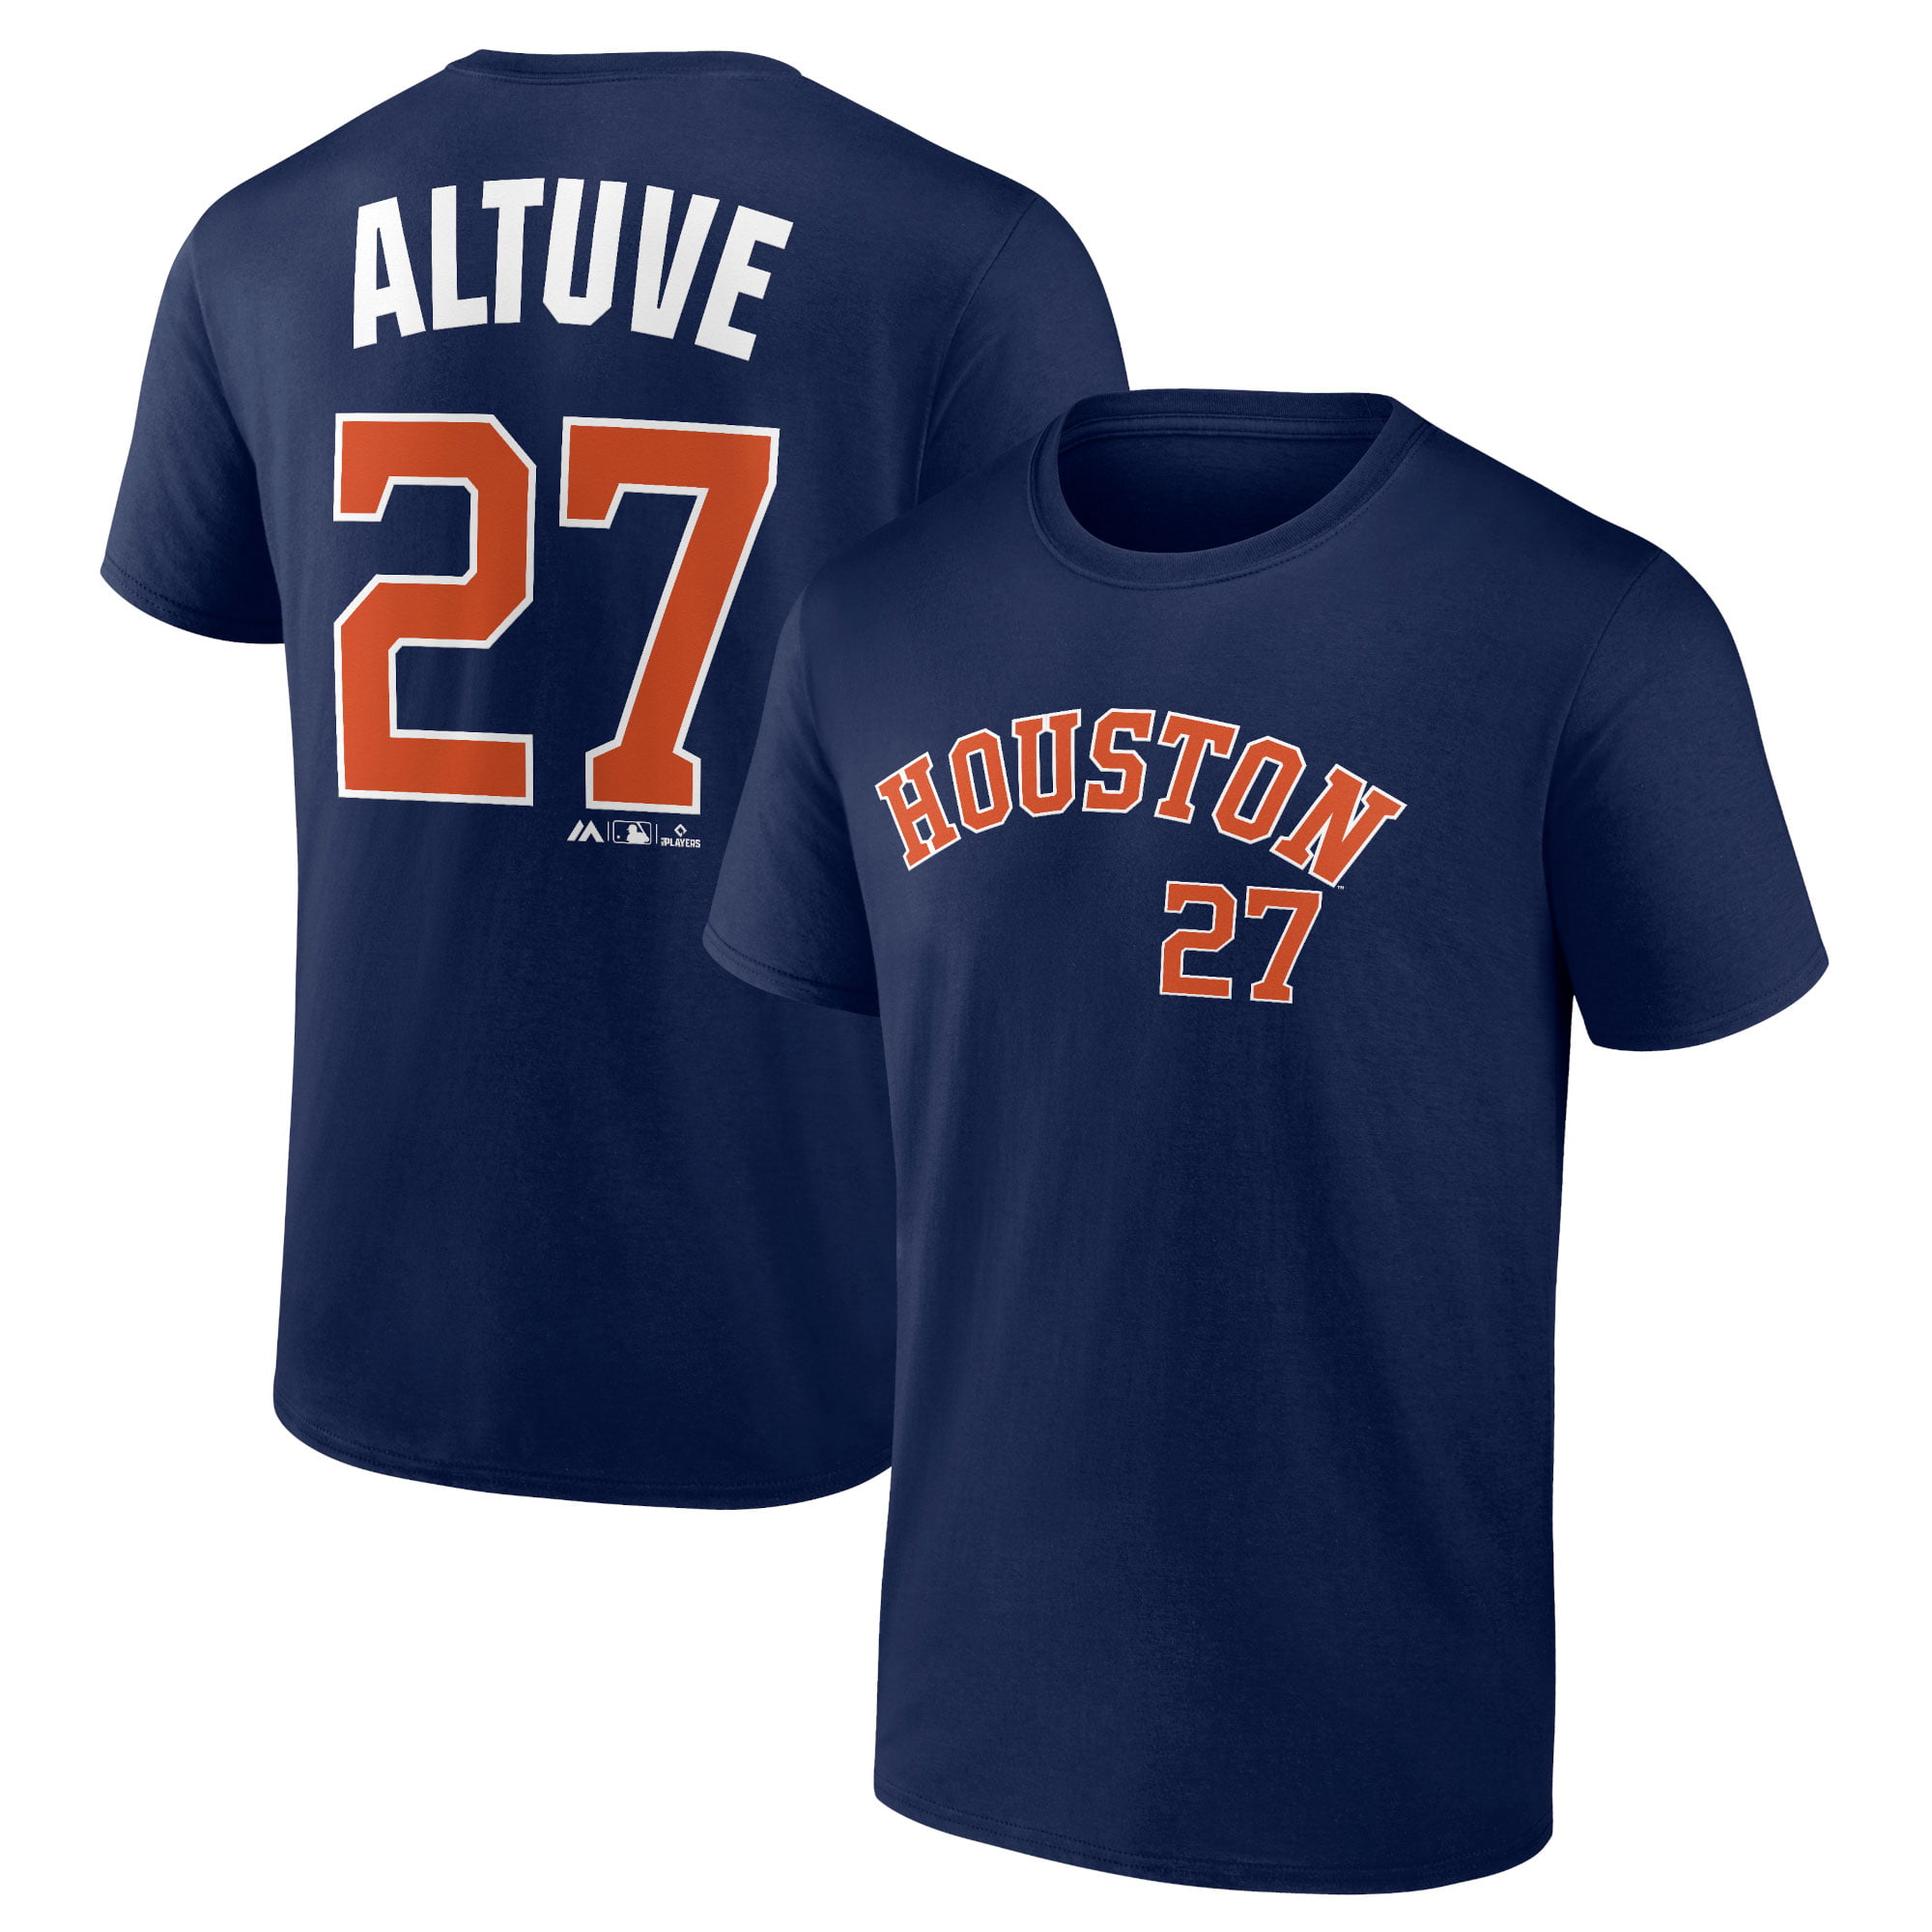 Men's Fanatics Branded Jose Altuve Navy Houston Astros Road Name